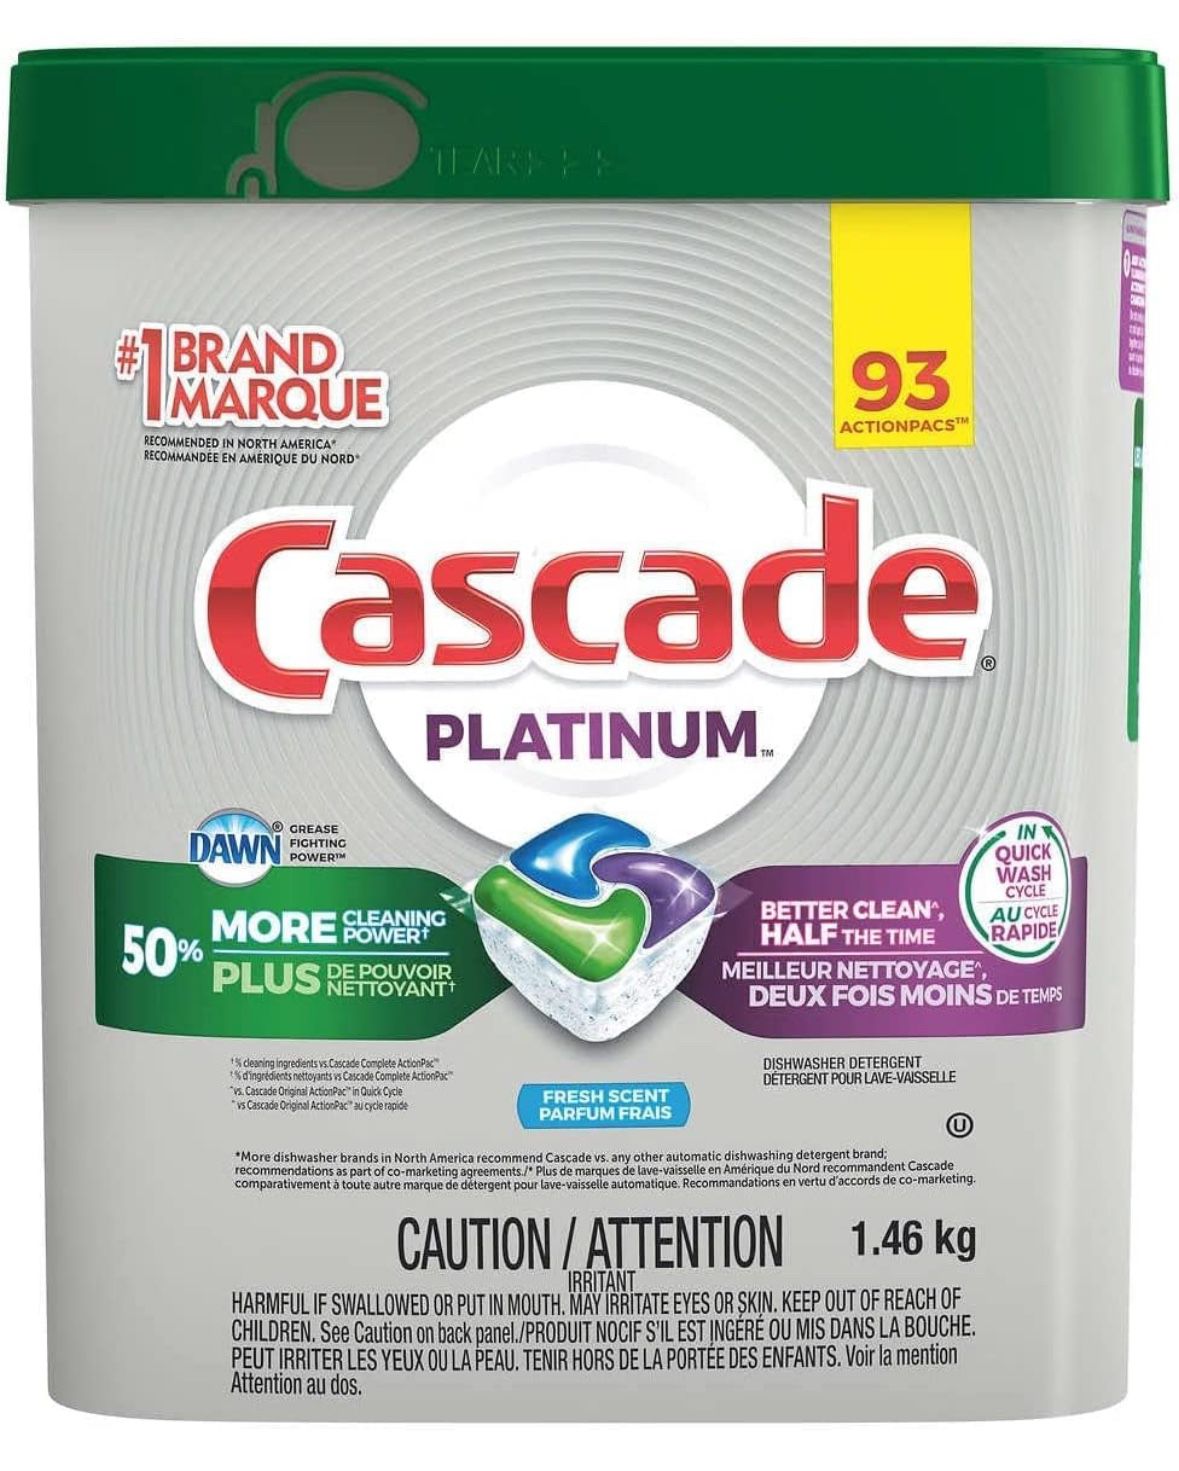 Cascade Platinum ActionPacs Dishwasher pods